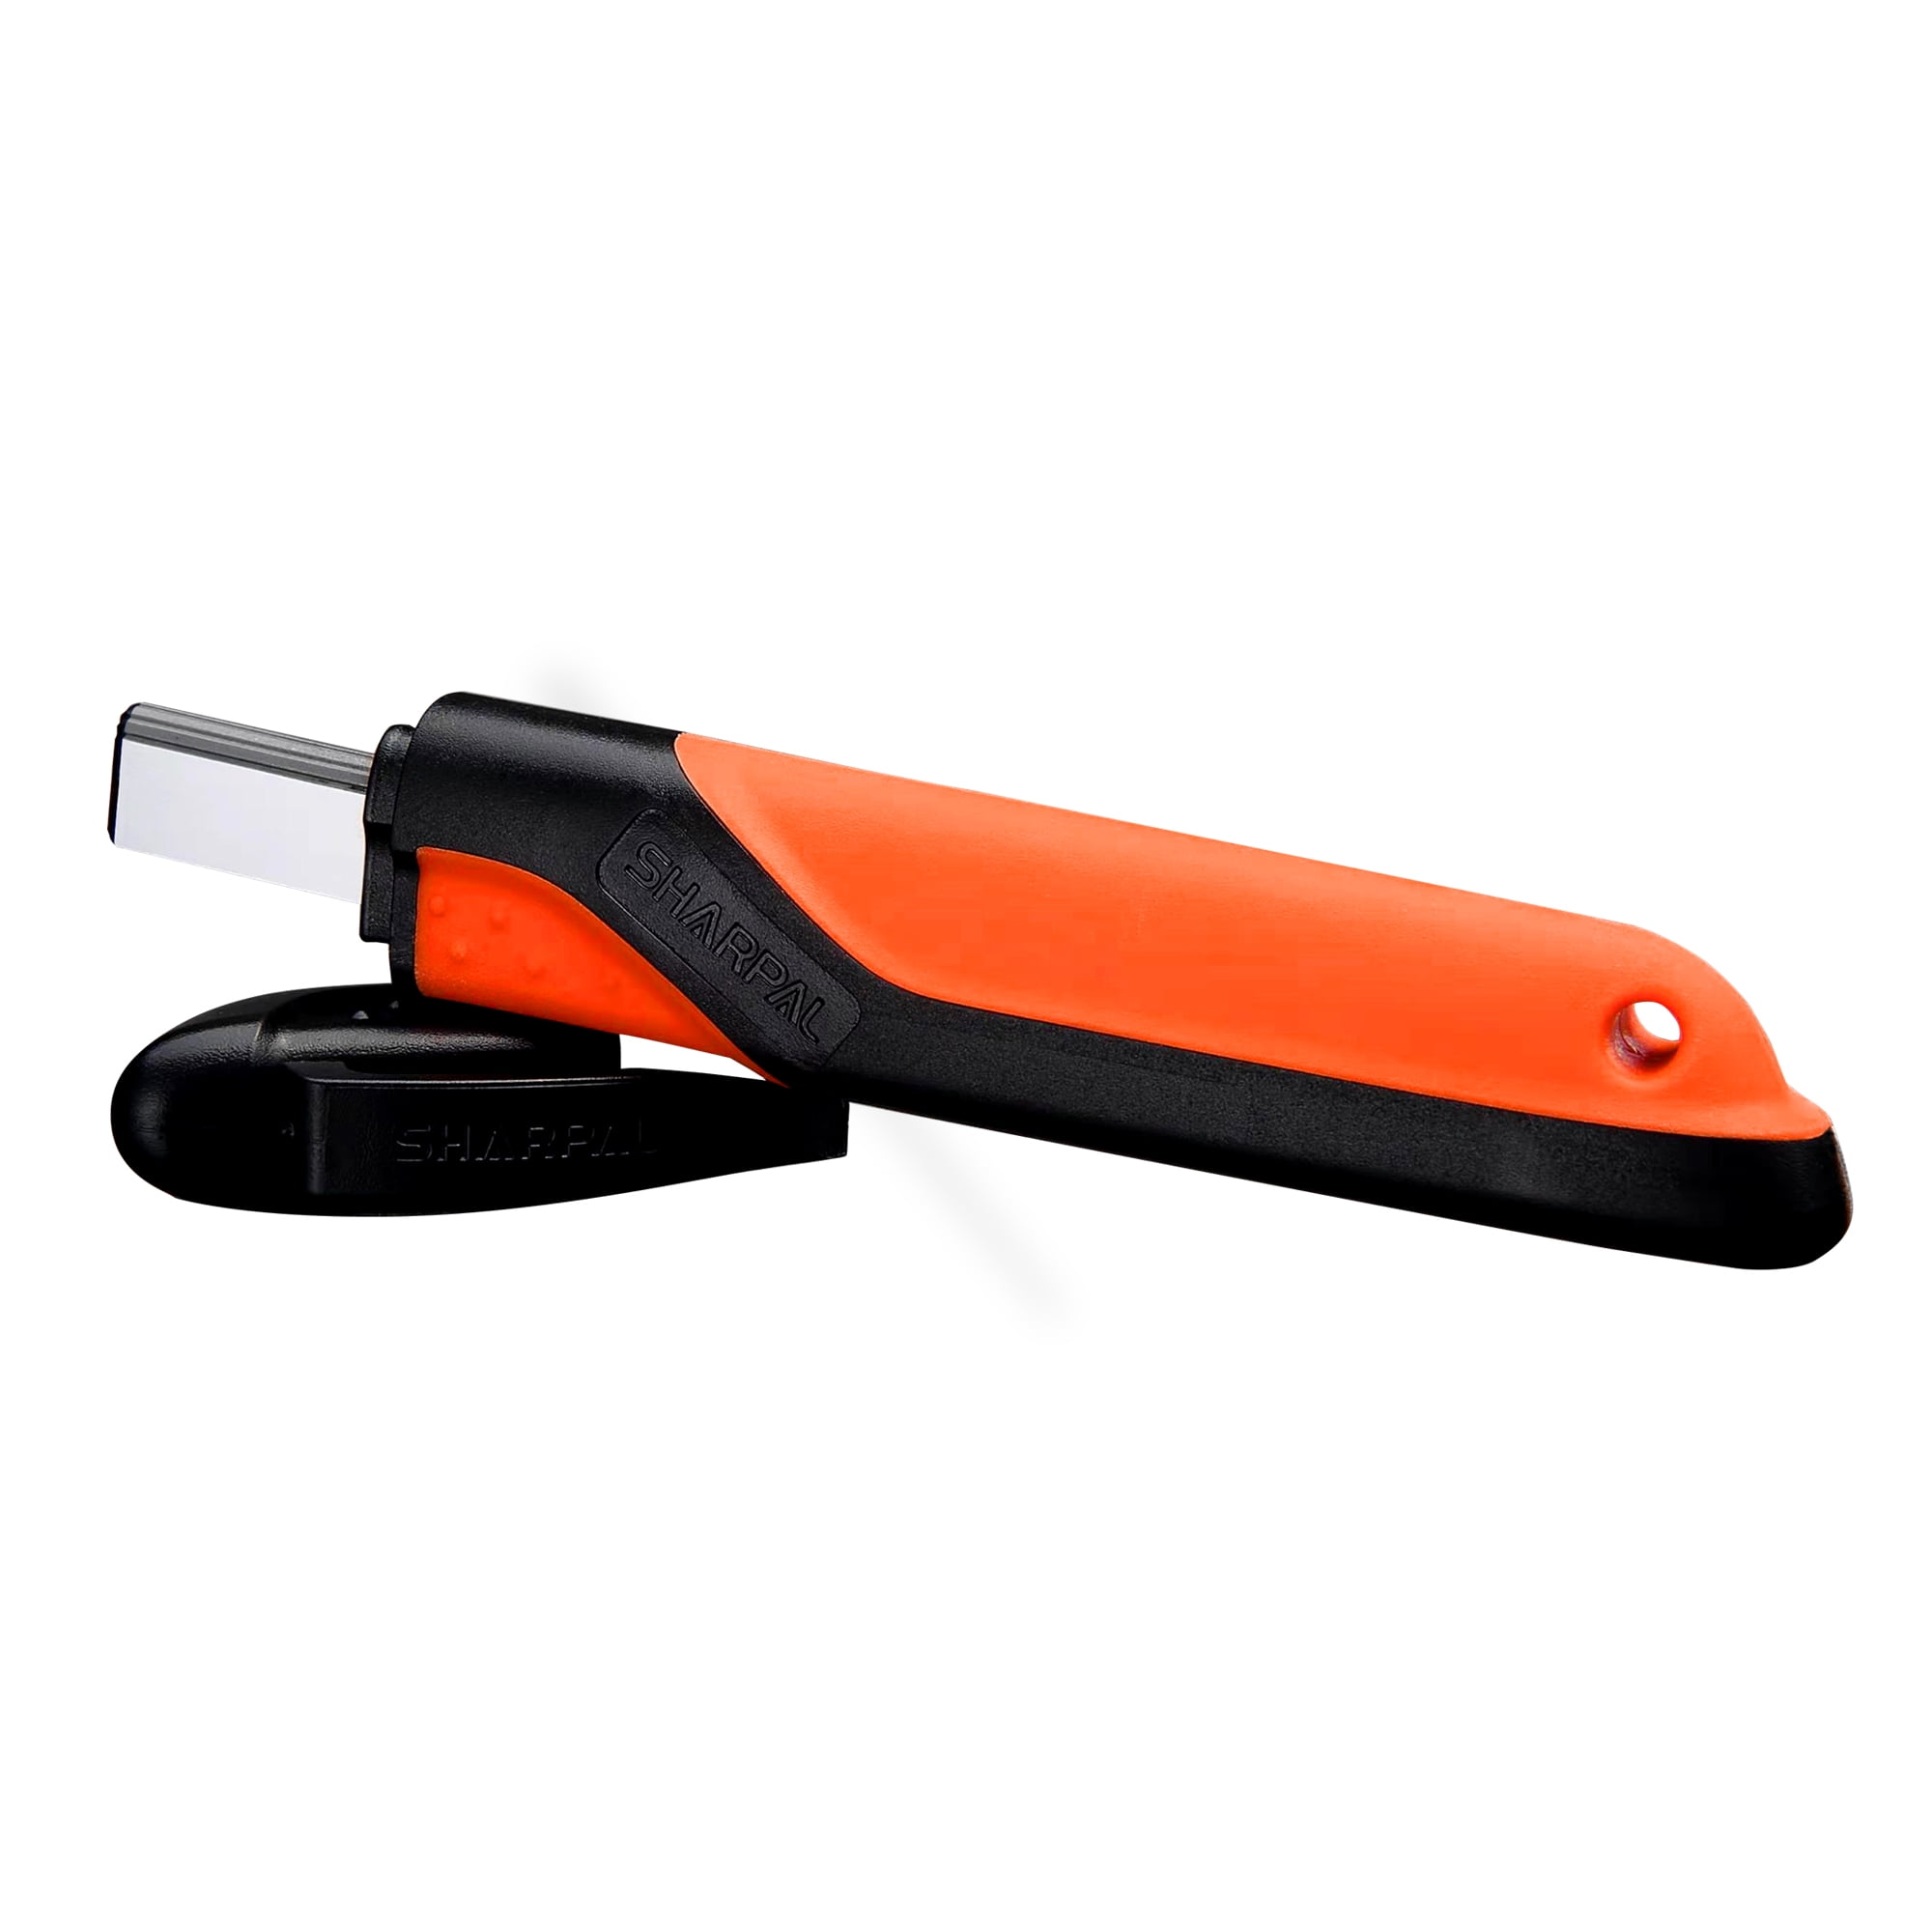 Sharpal 104N Professional Knife & Scissors Sharpener